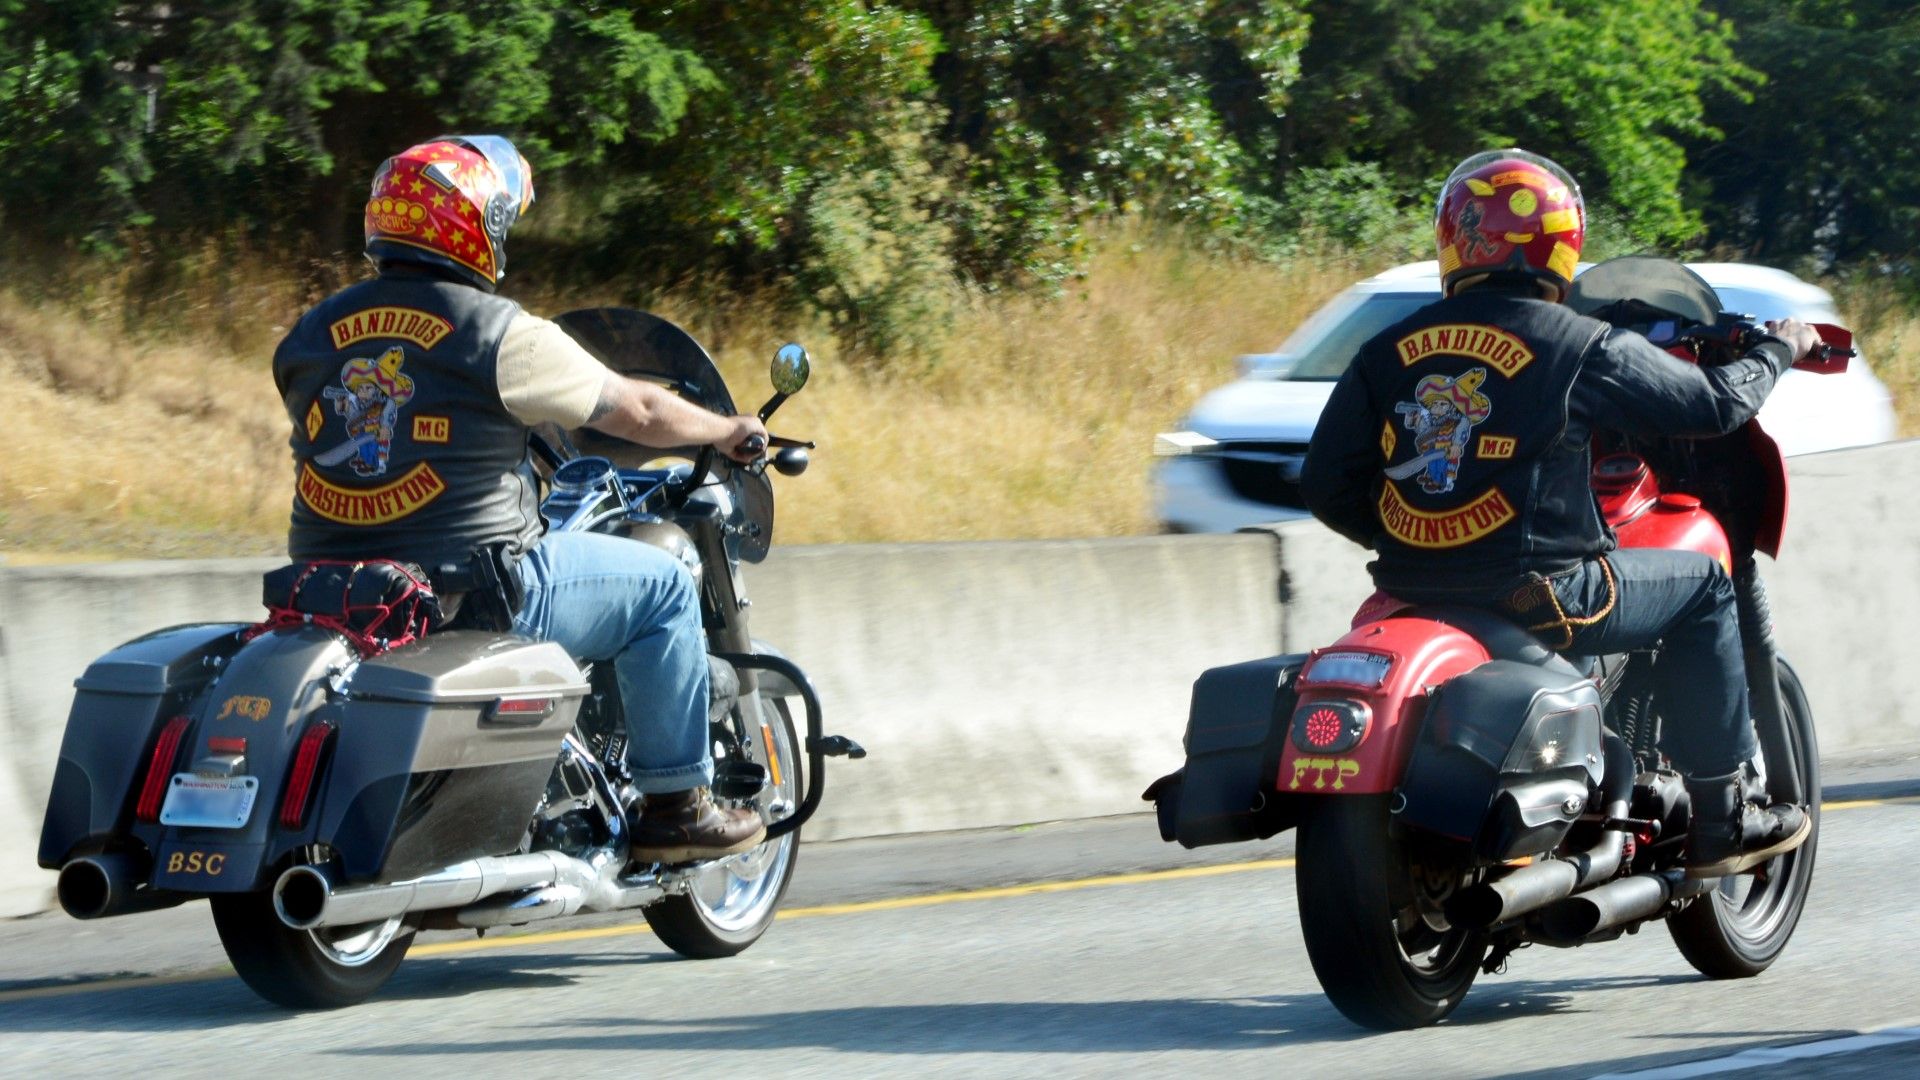 Bandidos Motorcycle Club members on the road